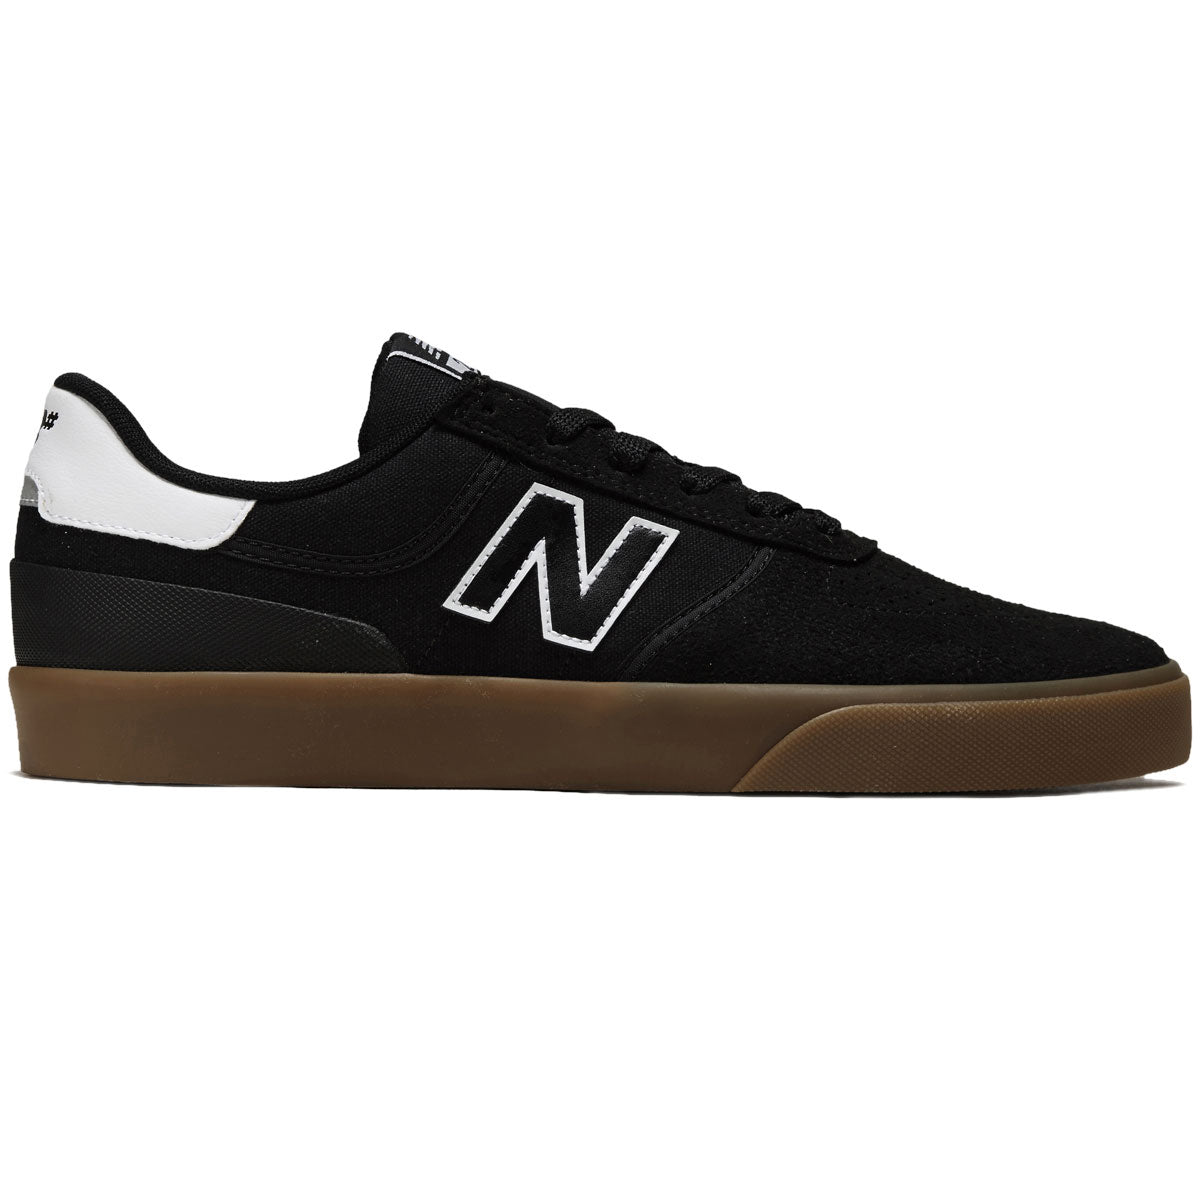 New Balance 272 Shoes - Black/Gum Vegan image 1